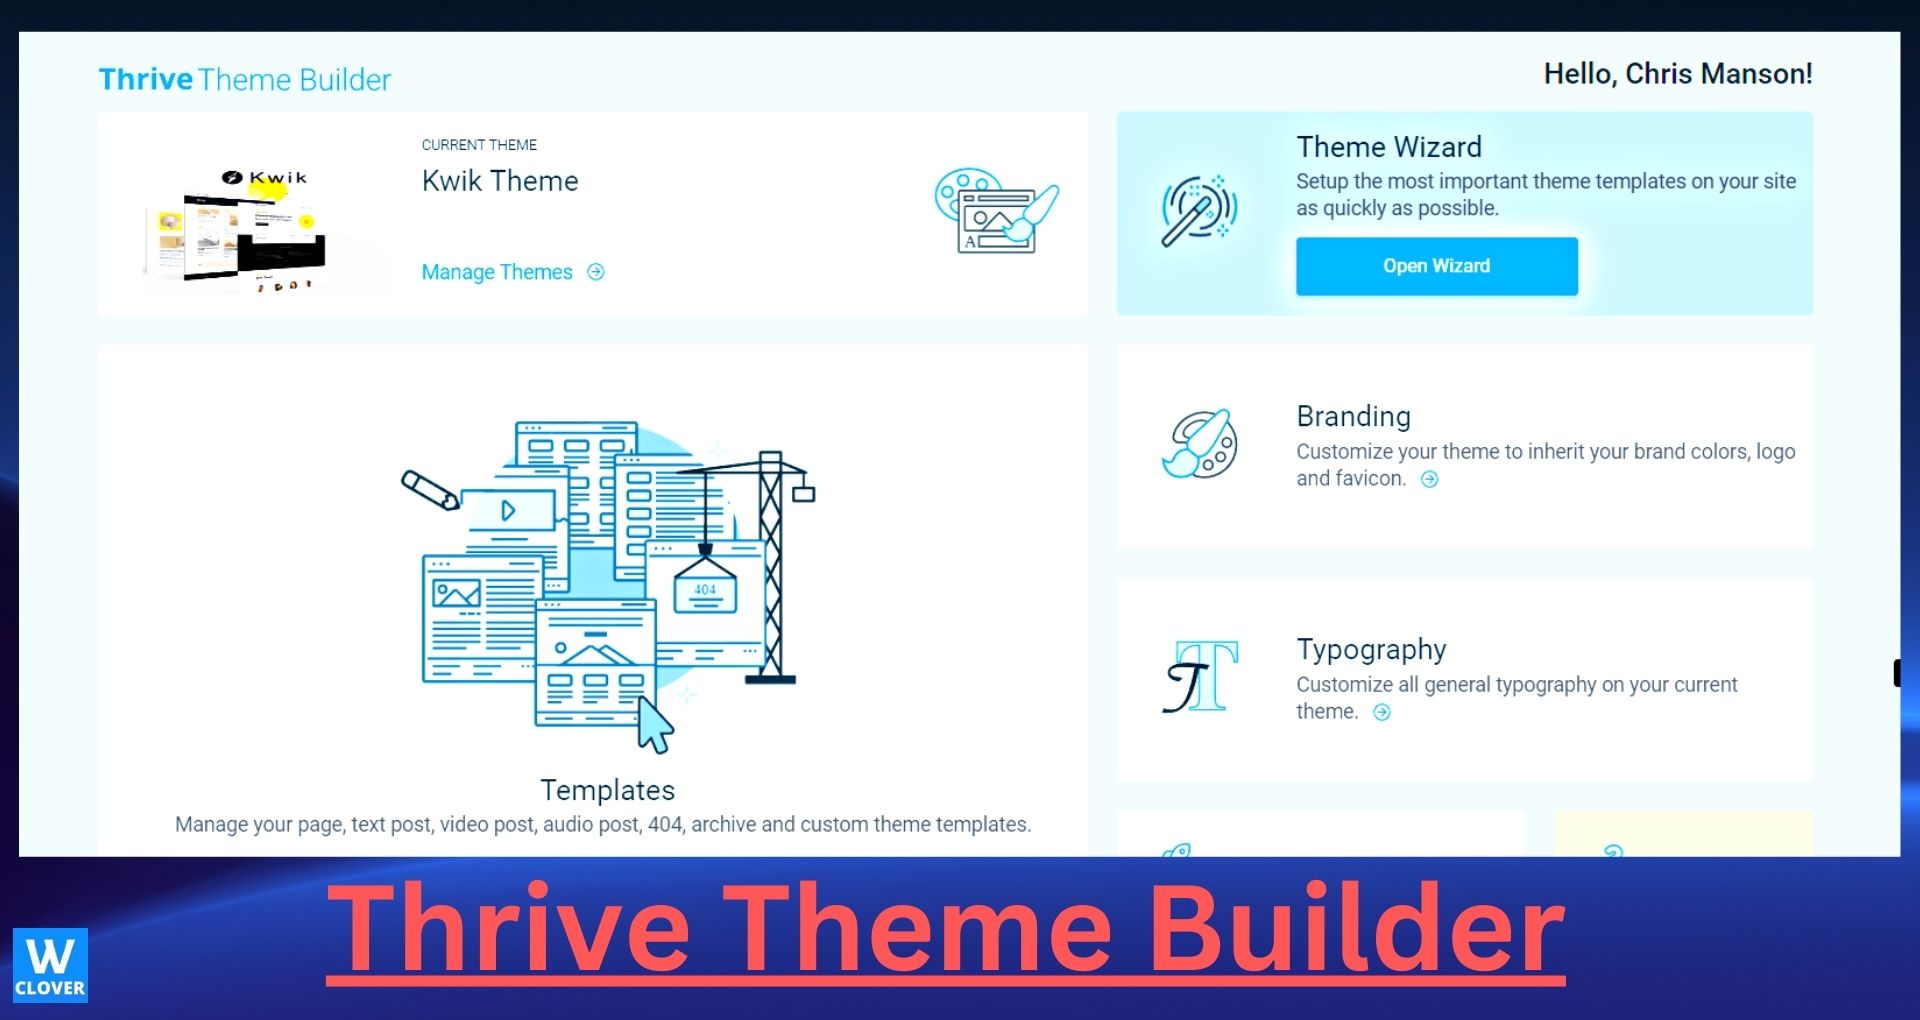 Thrive Theme Builder Dashboard